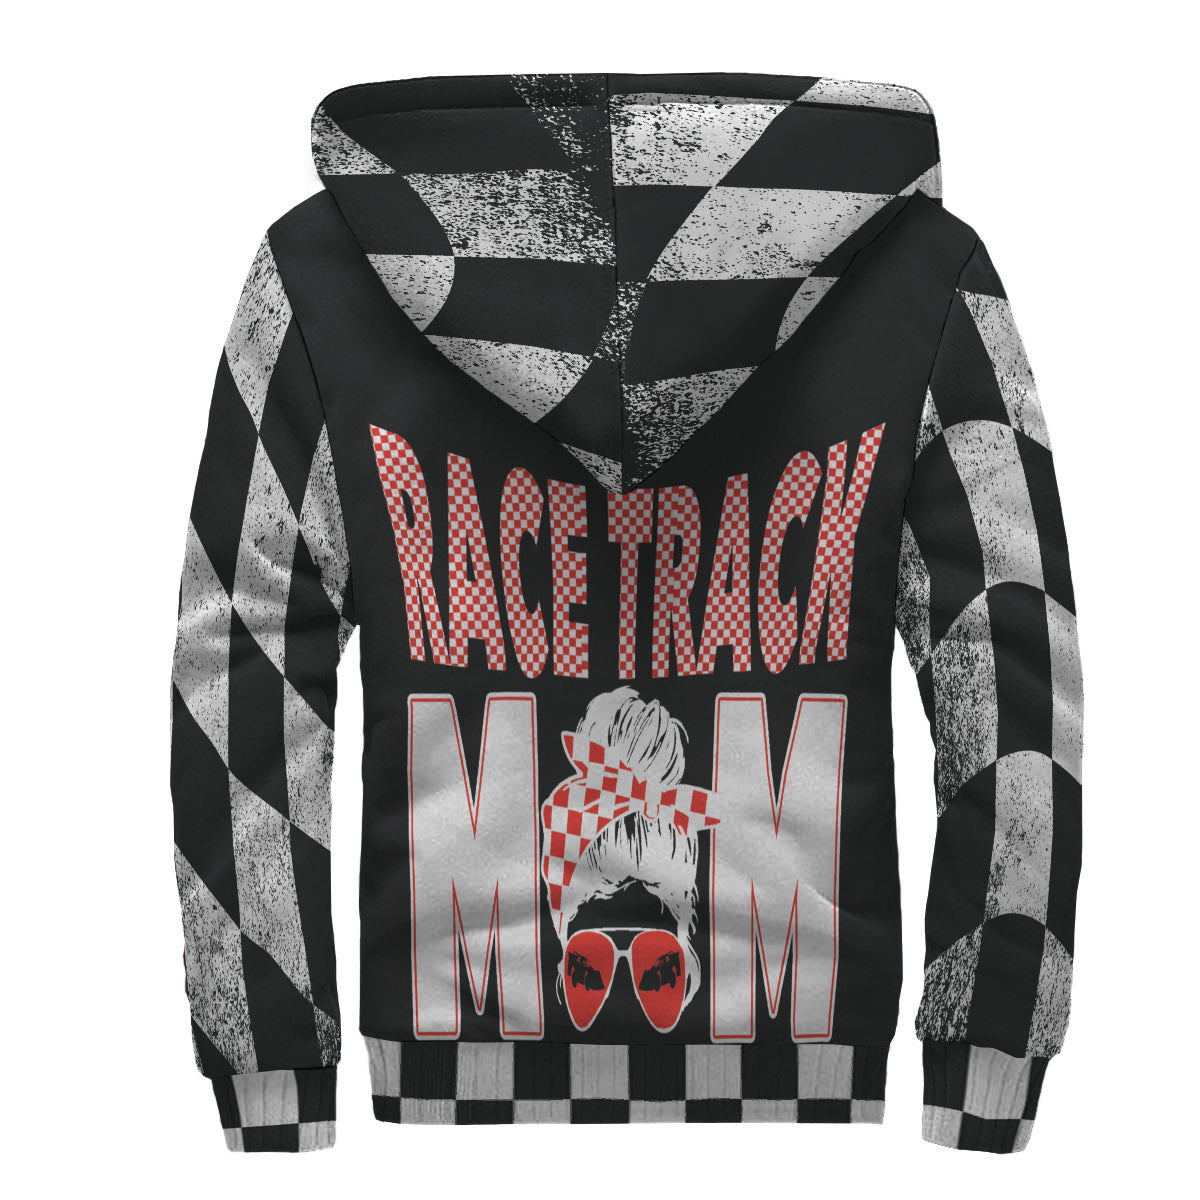 racing mom jacket